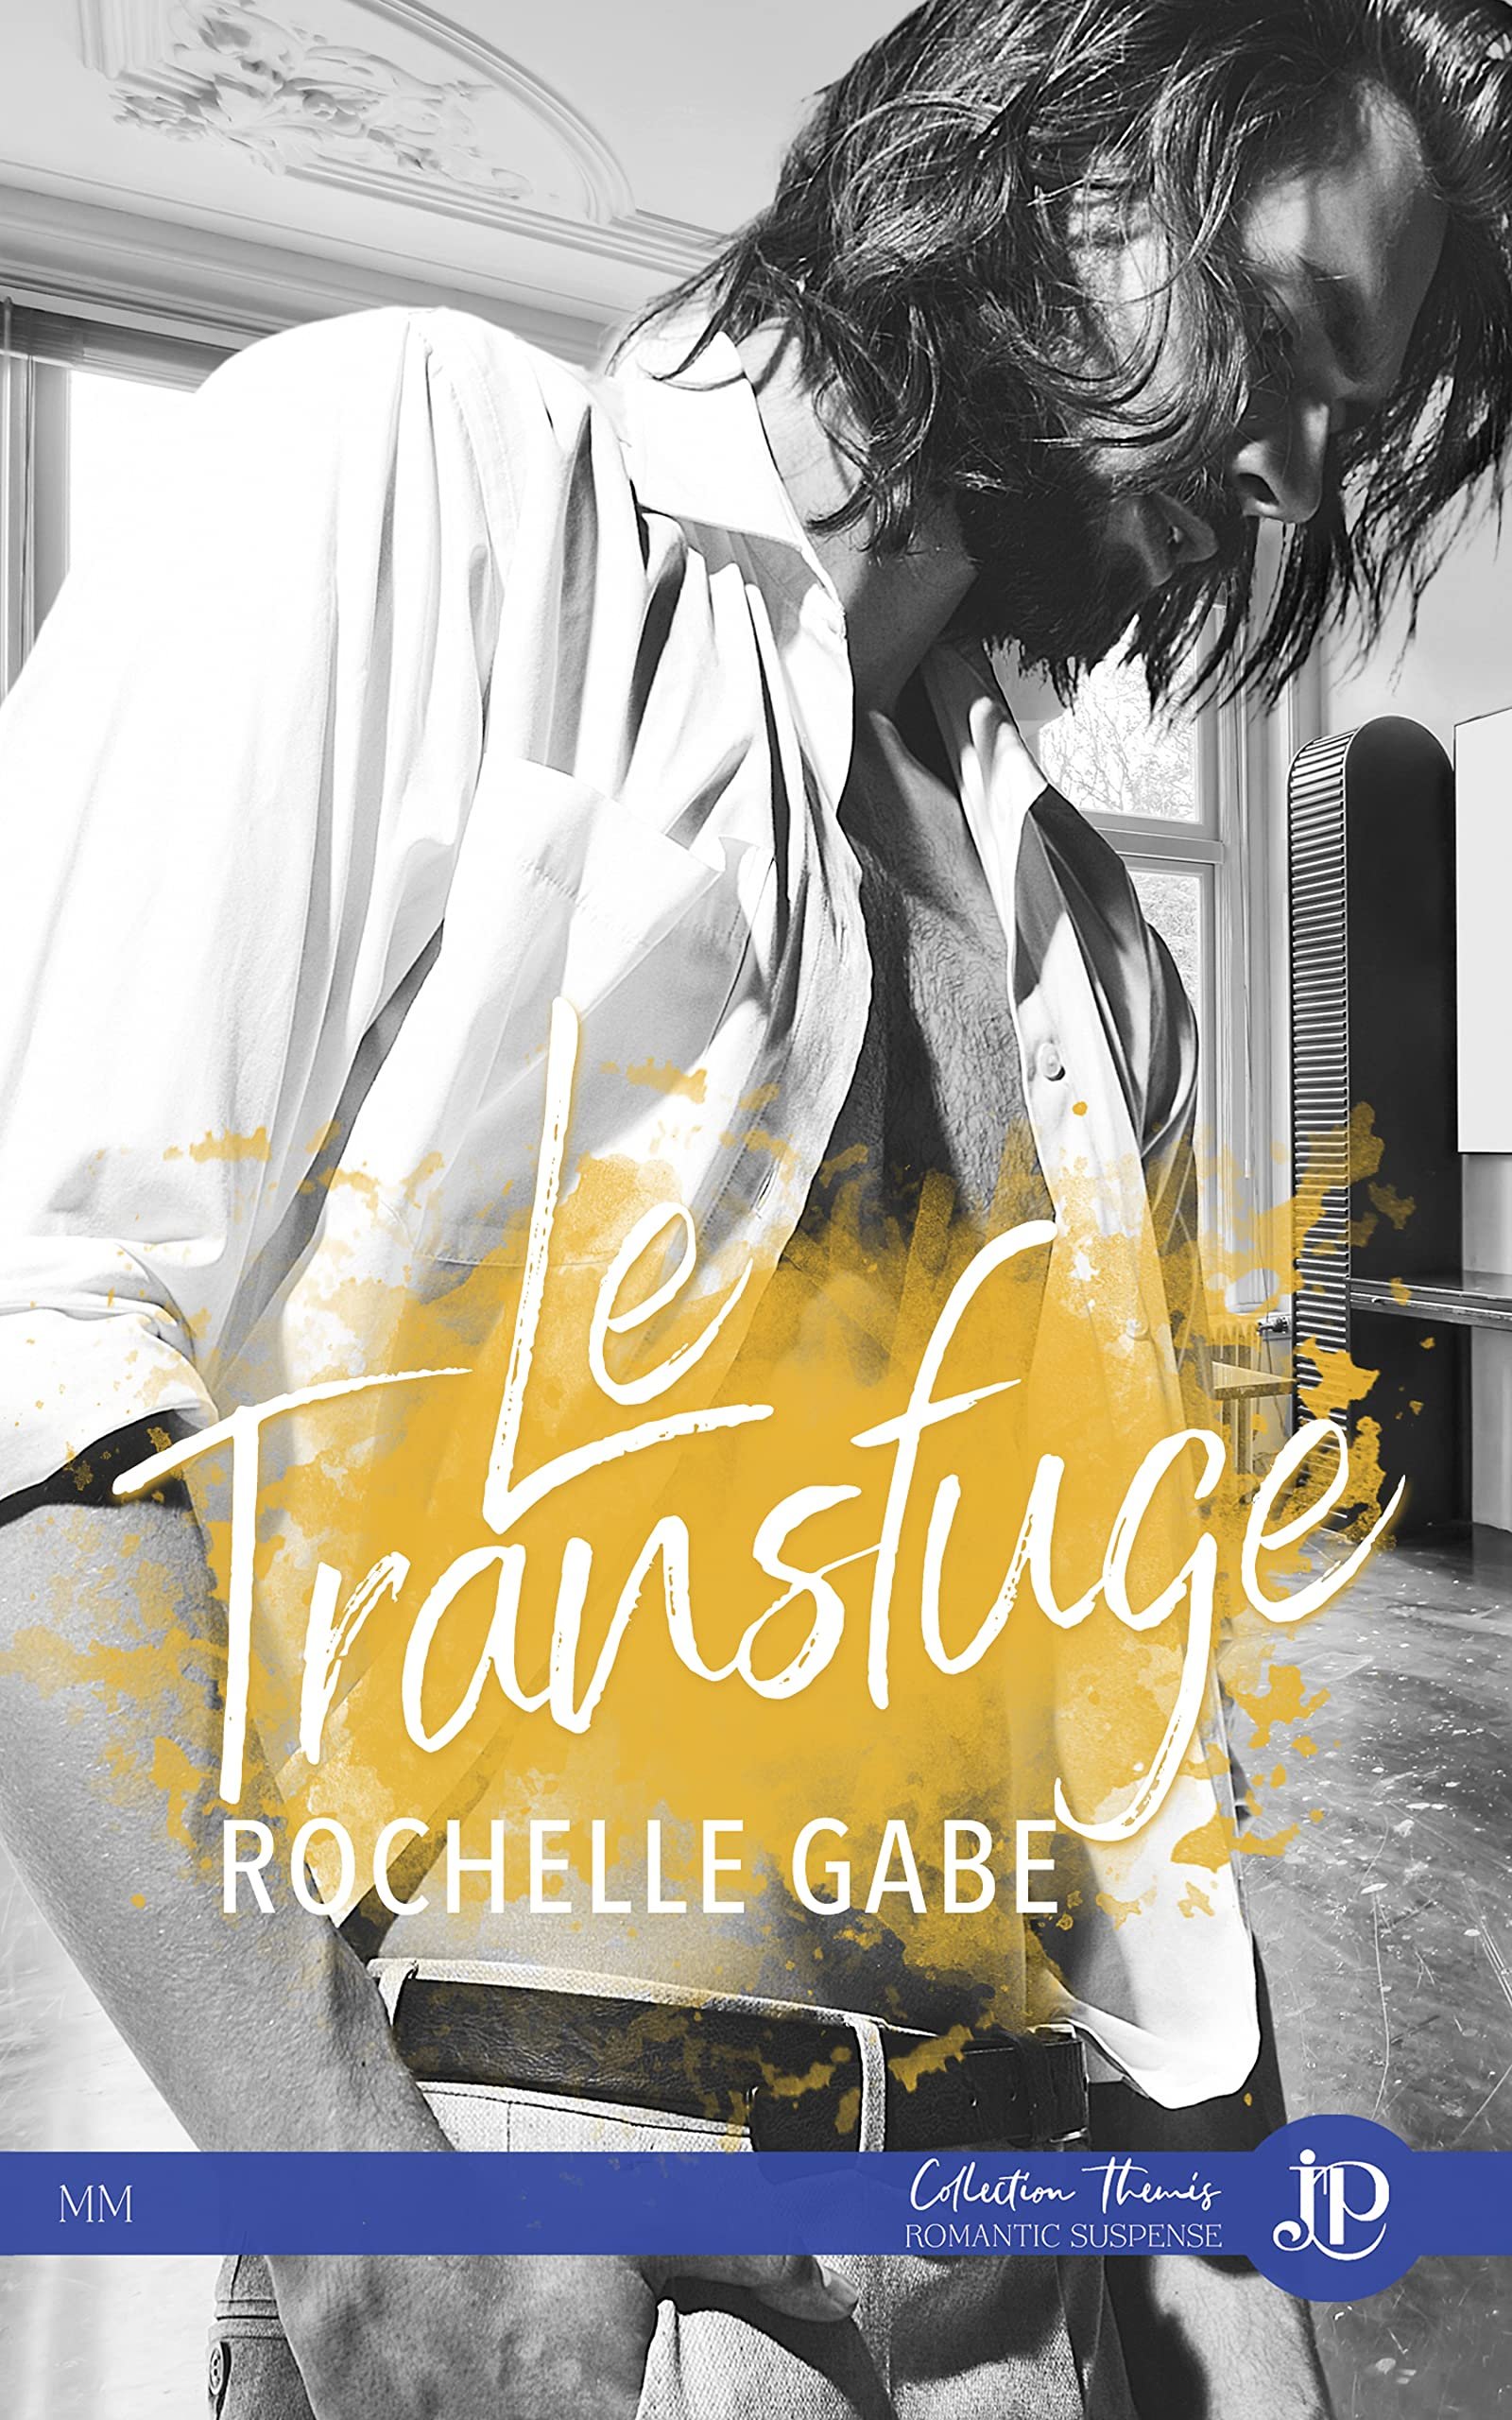 Rochelle Gabe – Le Transfuge